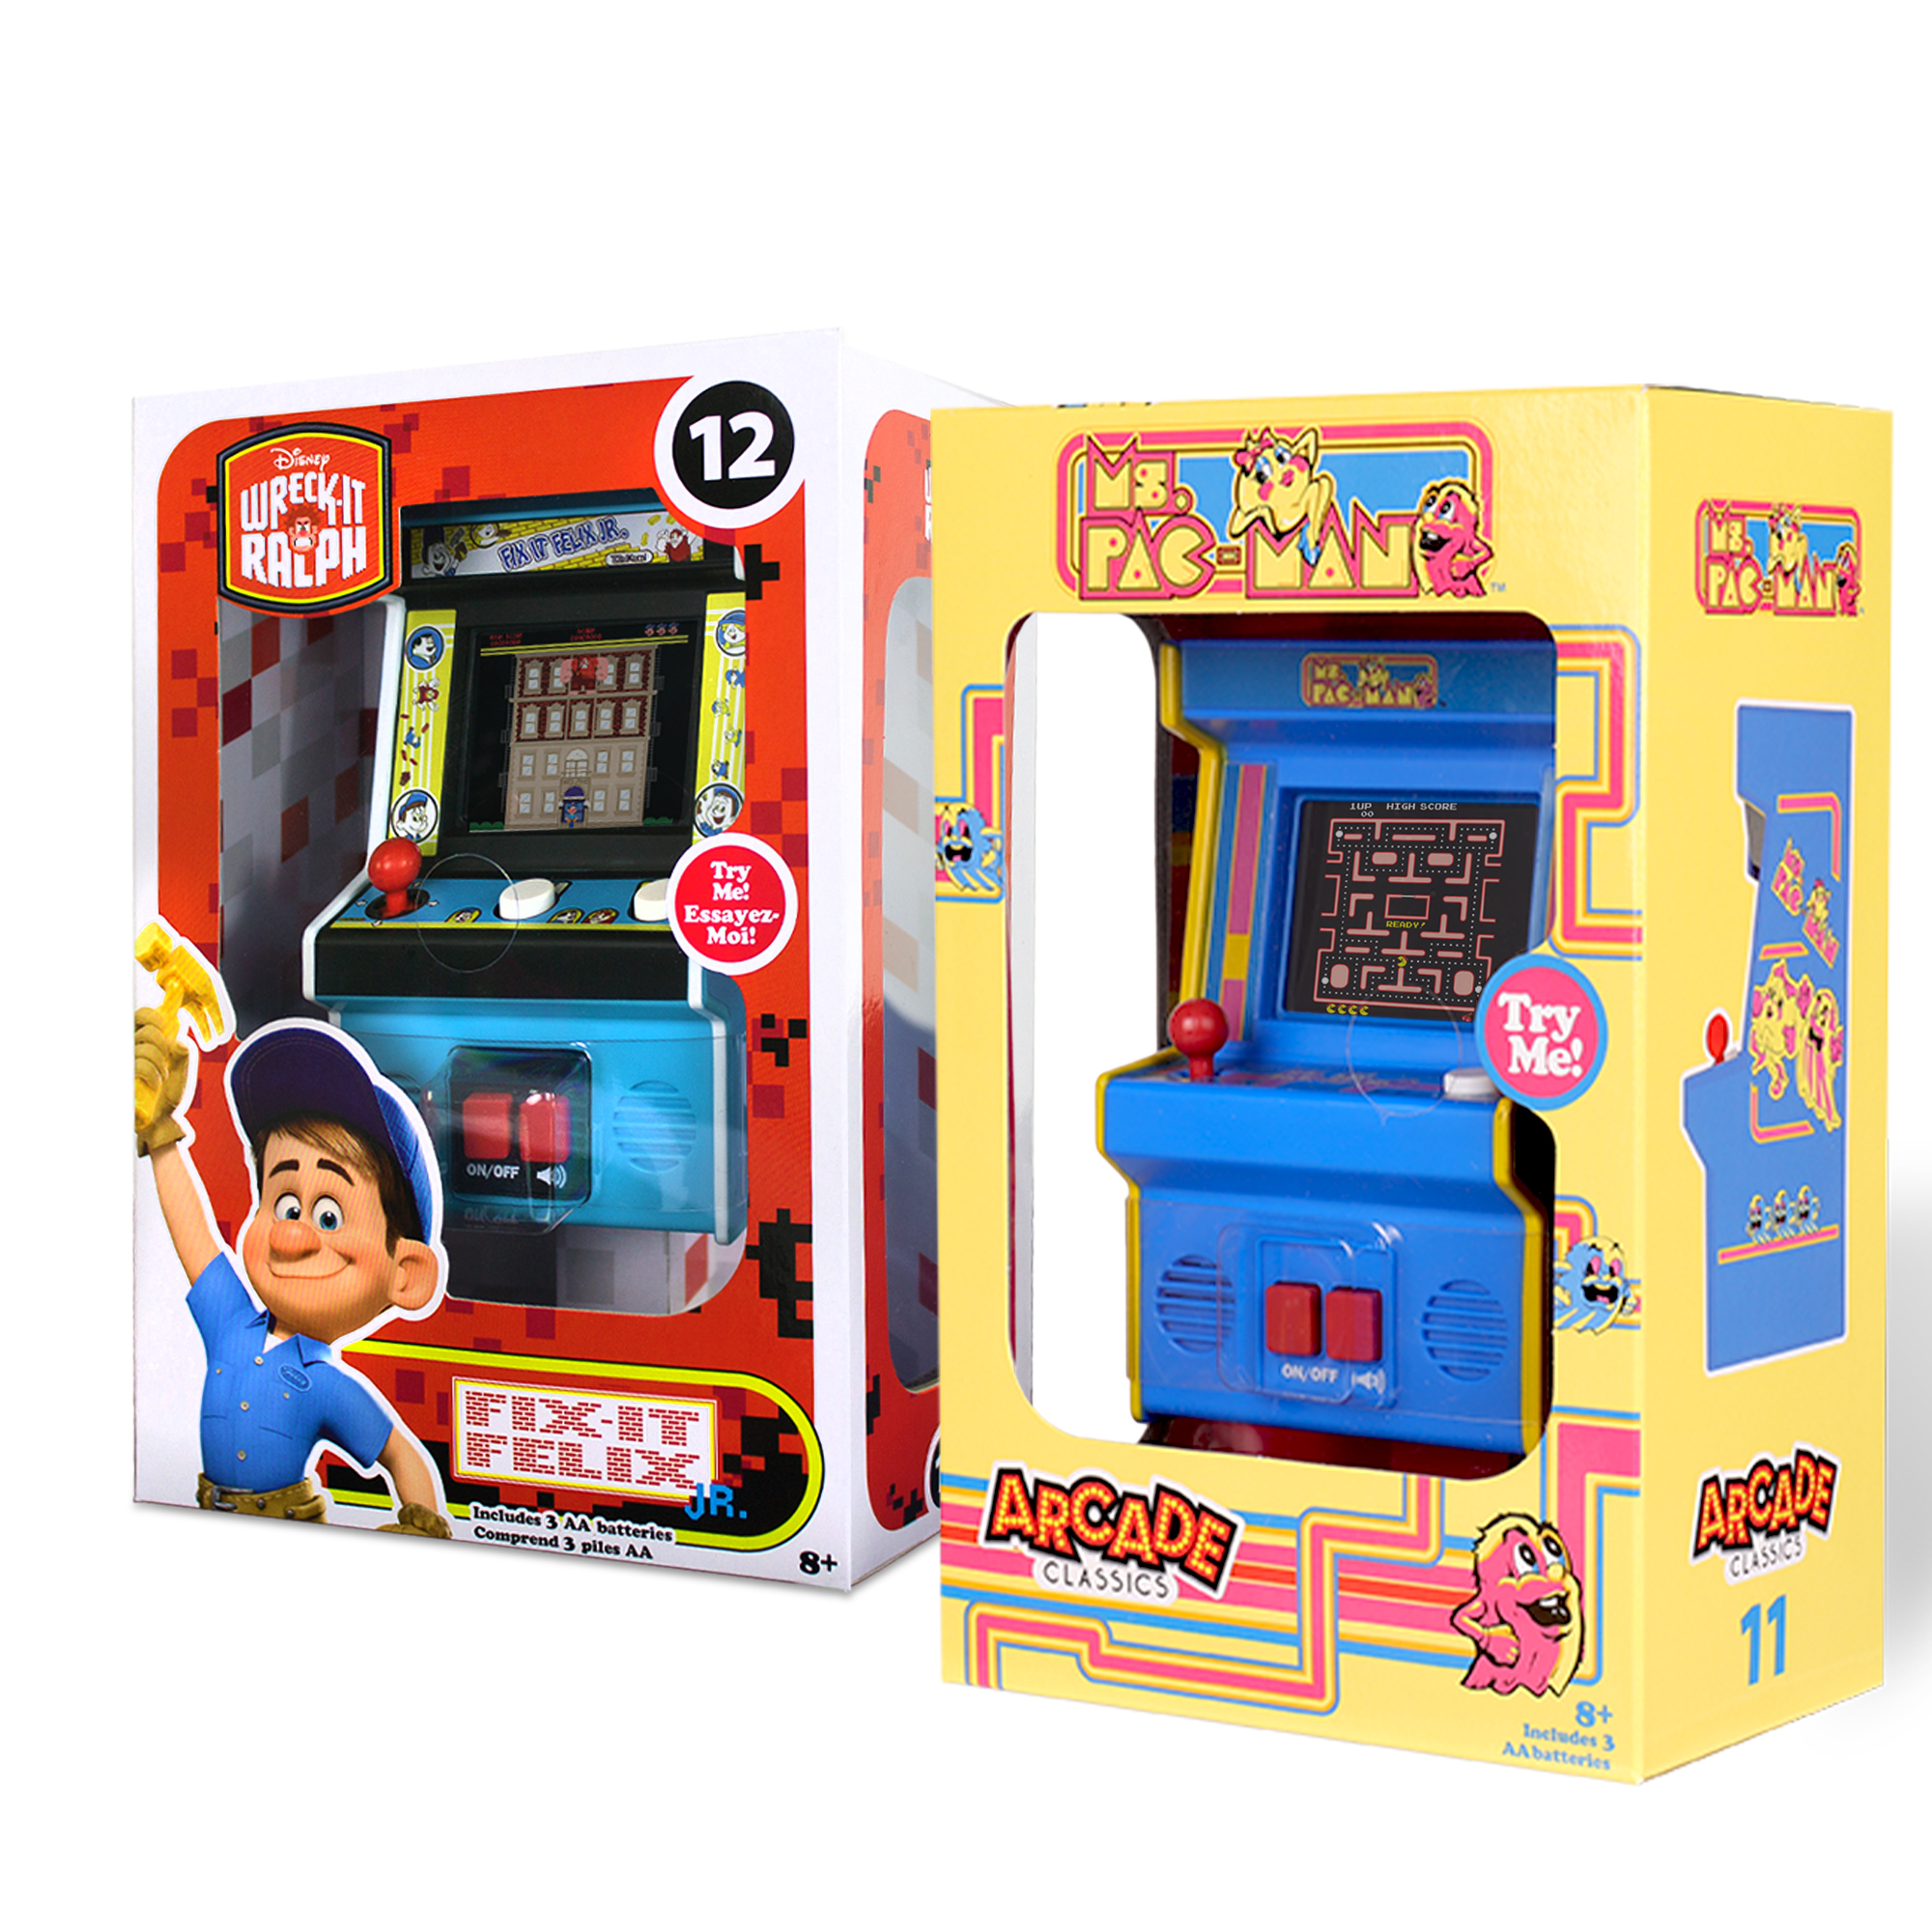 Arcade Classics Bundle Pack Ms Pac-Man Mini Arcade Game and Arcade Classics - Fix It Felix Mini Arcade Game - image 1 of 2